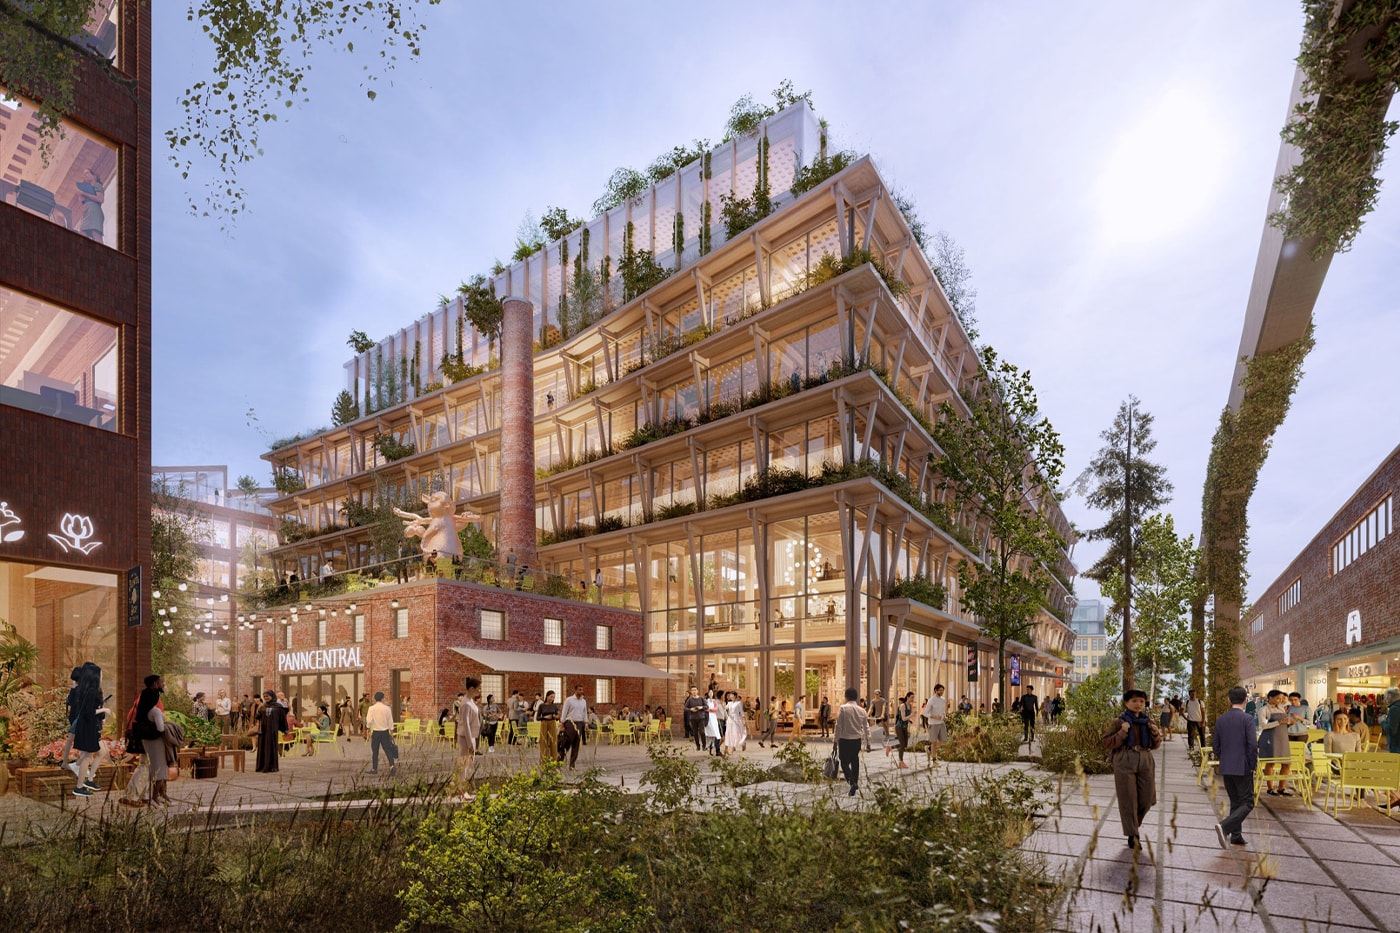 Sweden Is Set To Build the World's Largest Wooden City stockholm atrium ljungberg swedish design contemporary metropolis timber capital 2025